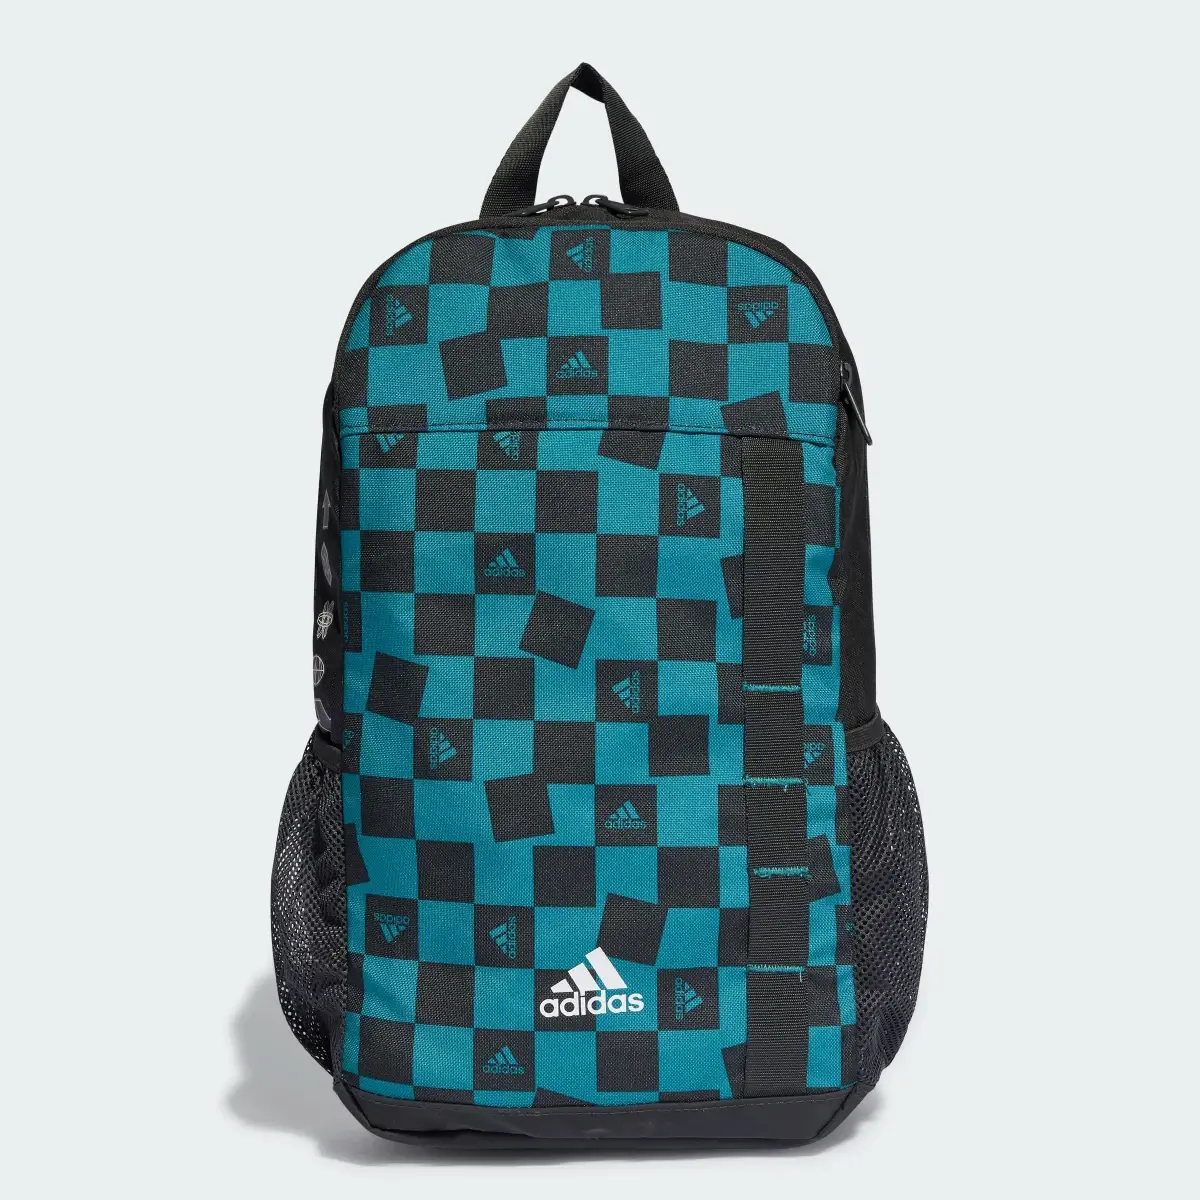 Adidas Plecak ARKD3. 1